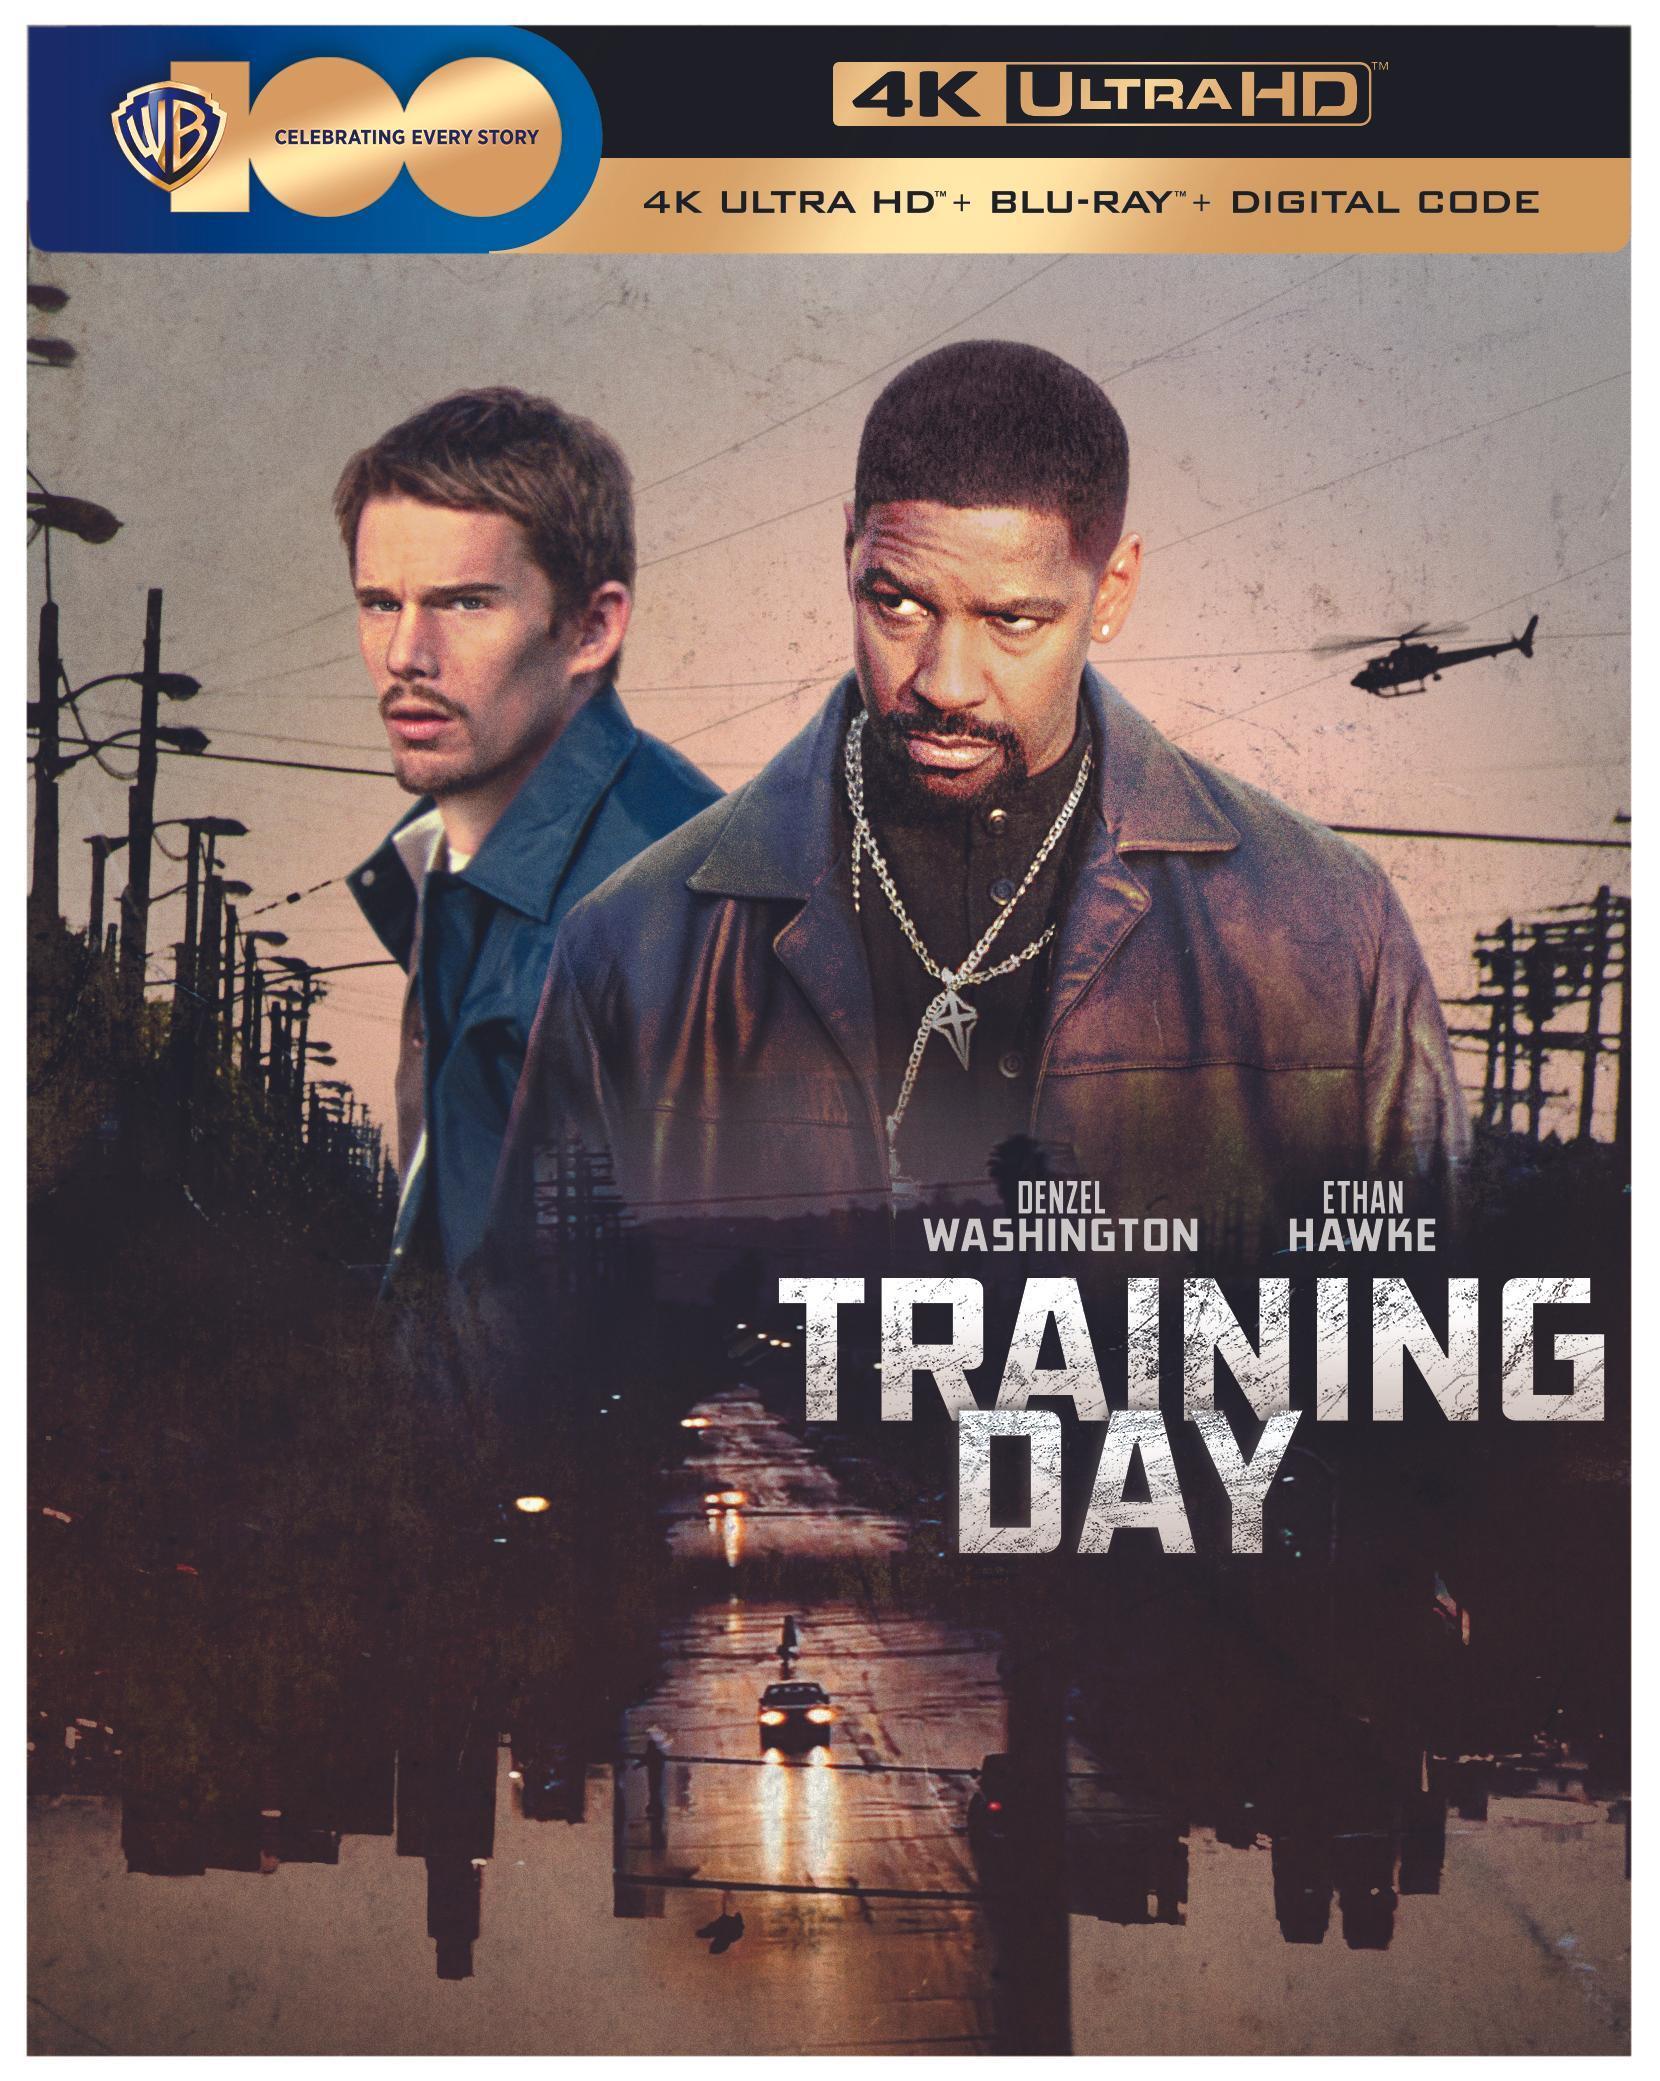 Training Day (4K Ultra HD + Blu-ray) - UHD [ 2001 ]  - Thriller Movies On 4K Ultra HD Blu-ray - Movies On GRUV